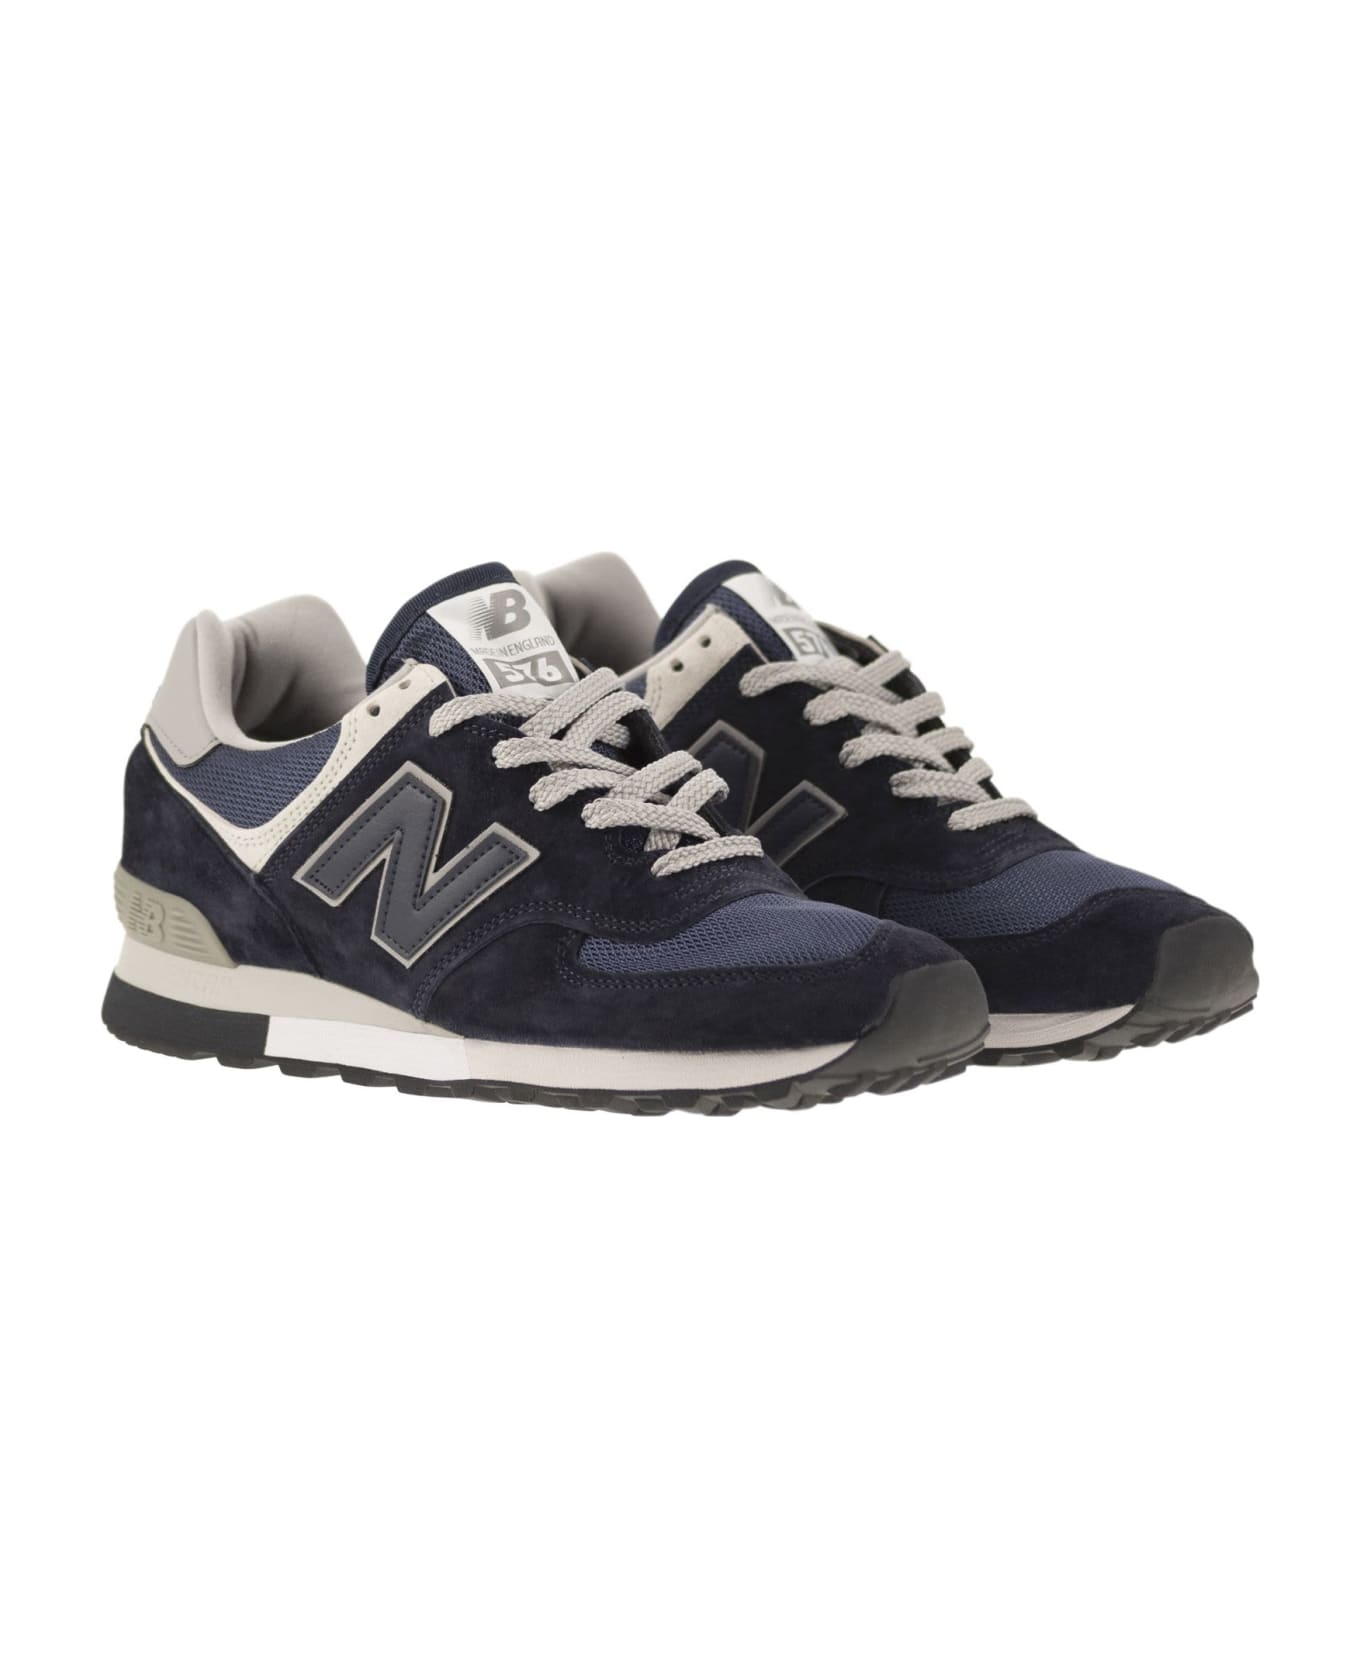 New Balance 576 - Sneakers - Navy